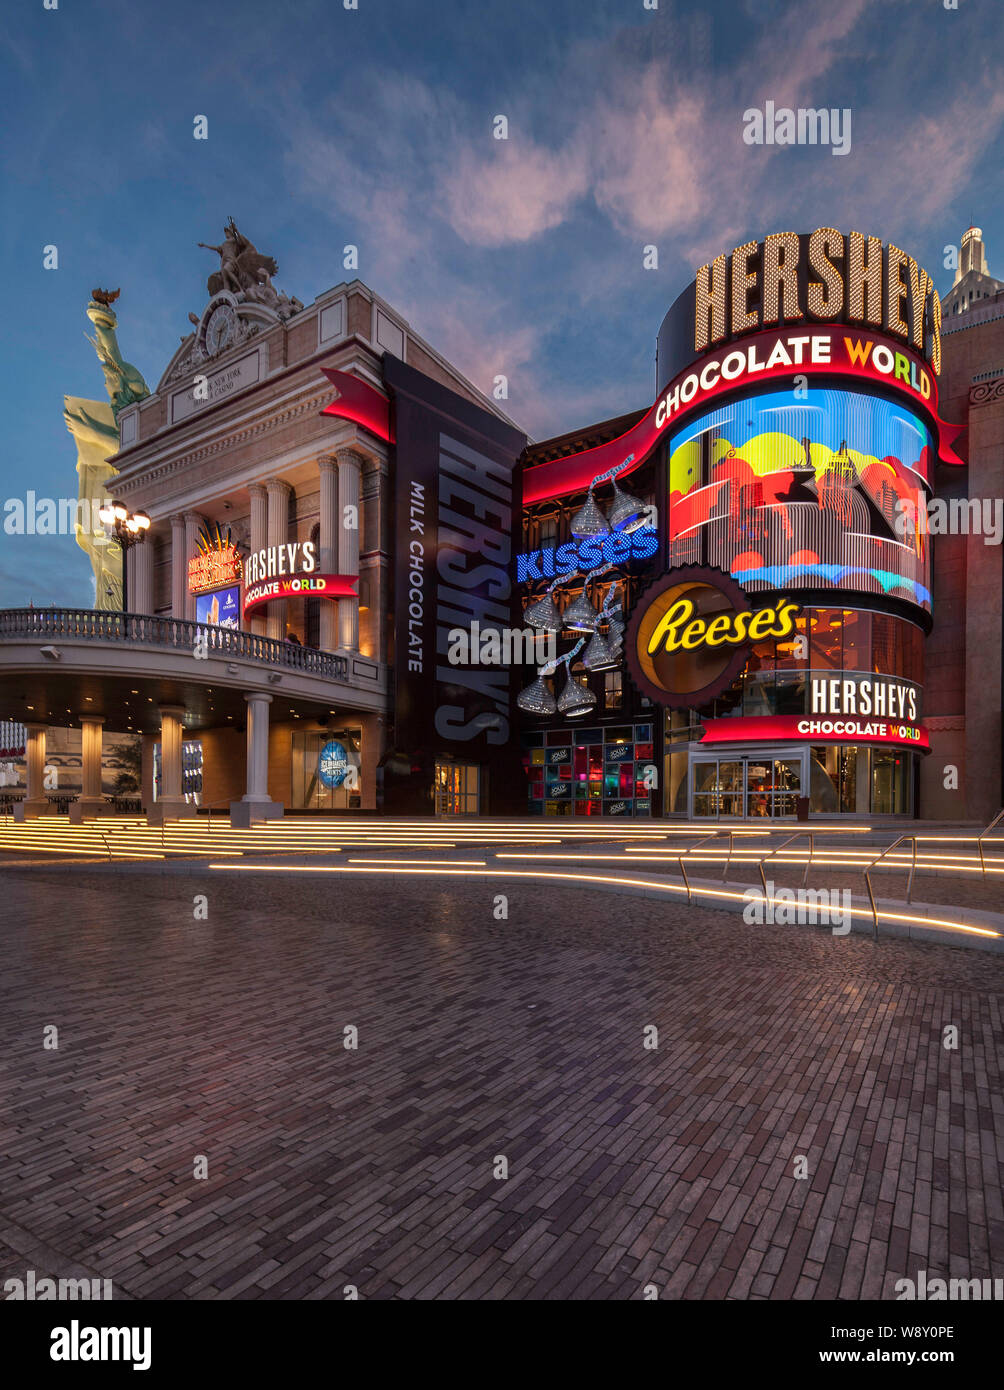 Hershey's Chocolate World Store on the Las Vegas Strip Stock Photo